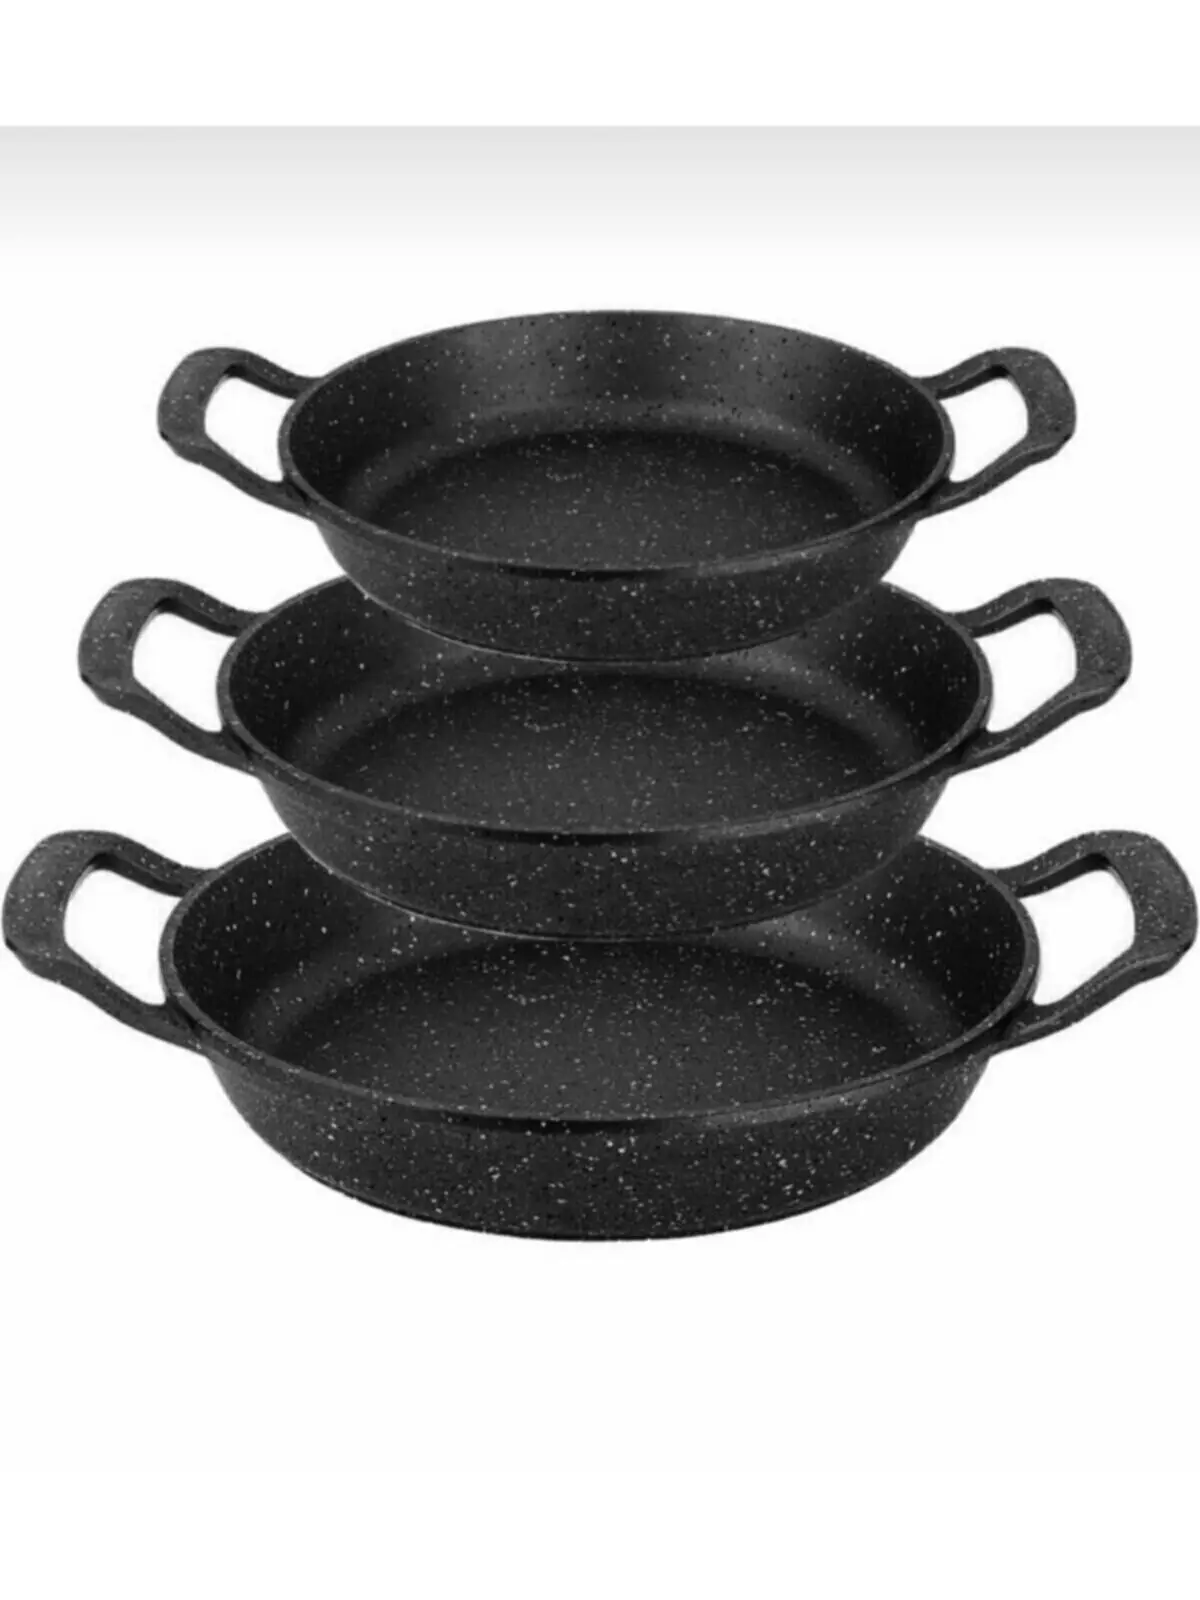 

Cast Granite Luxury Pan Set of 3 pcs Pans Black Granite Coating Frying Pans Marble Pot Induction Cooker сковорода non stick pan